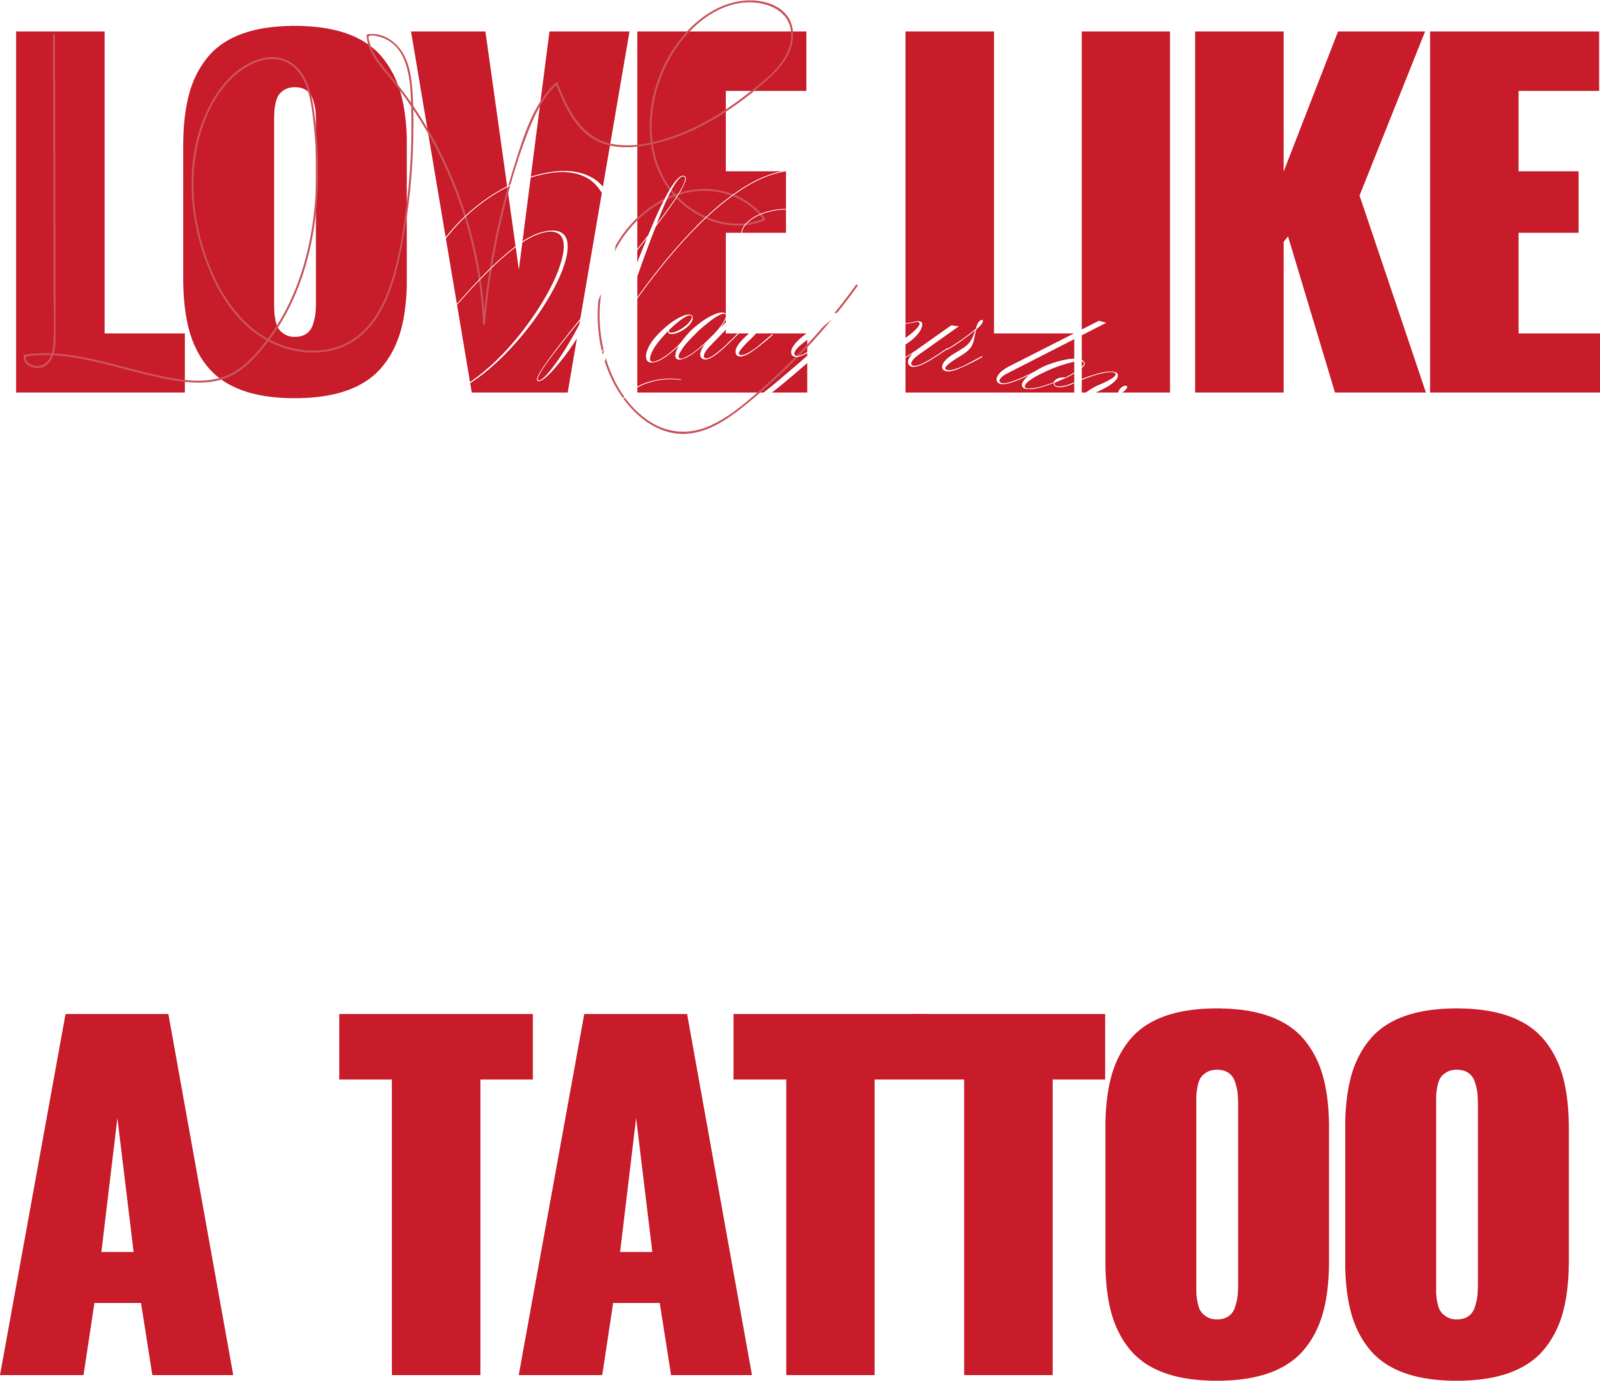 Love like a tattoo